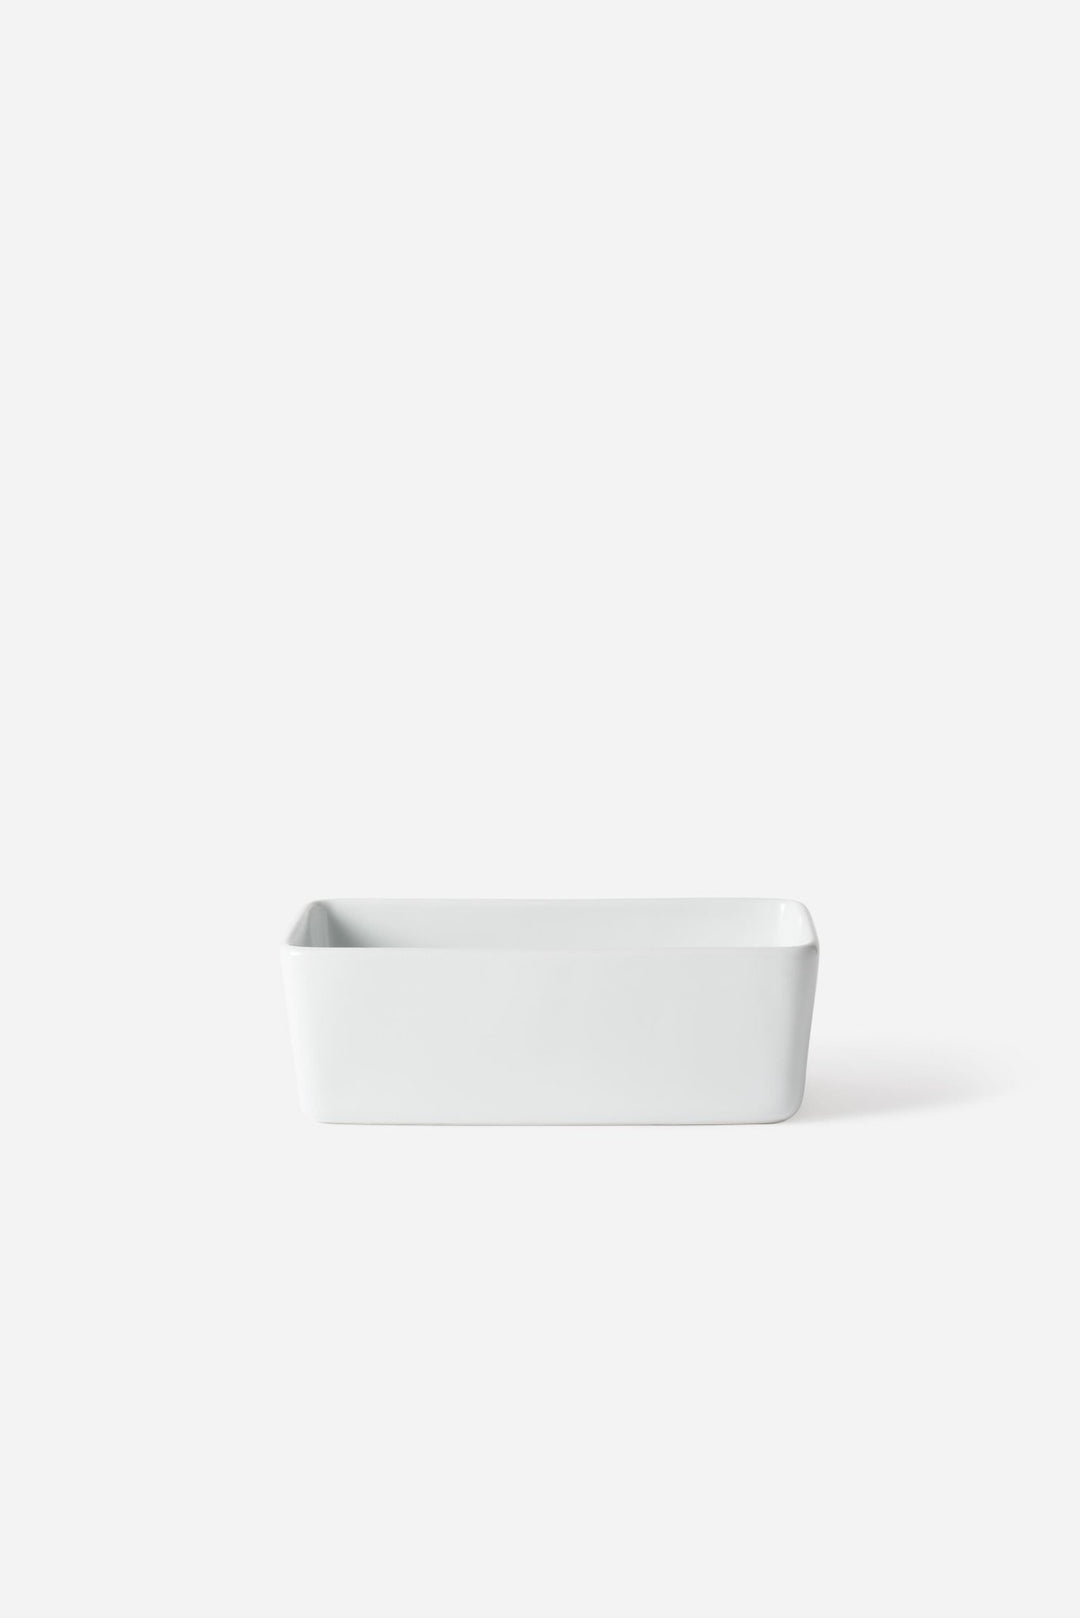 Porcelain Rectangular Dish - White 1120 - Chillis & More NZ